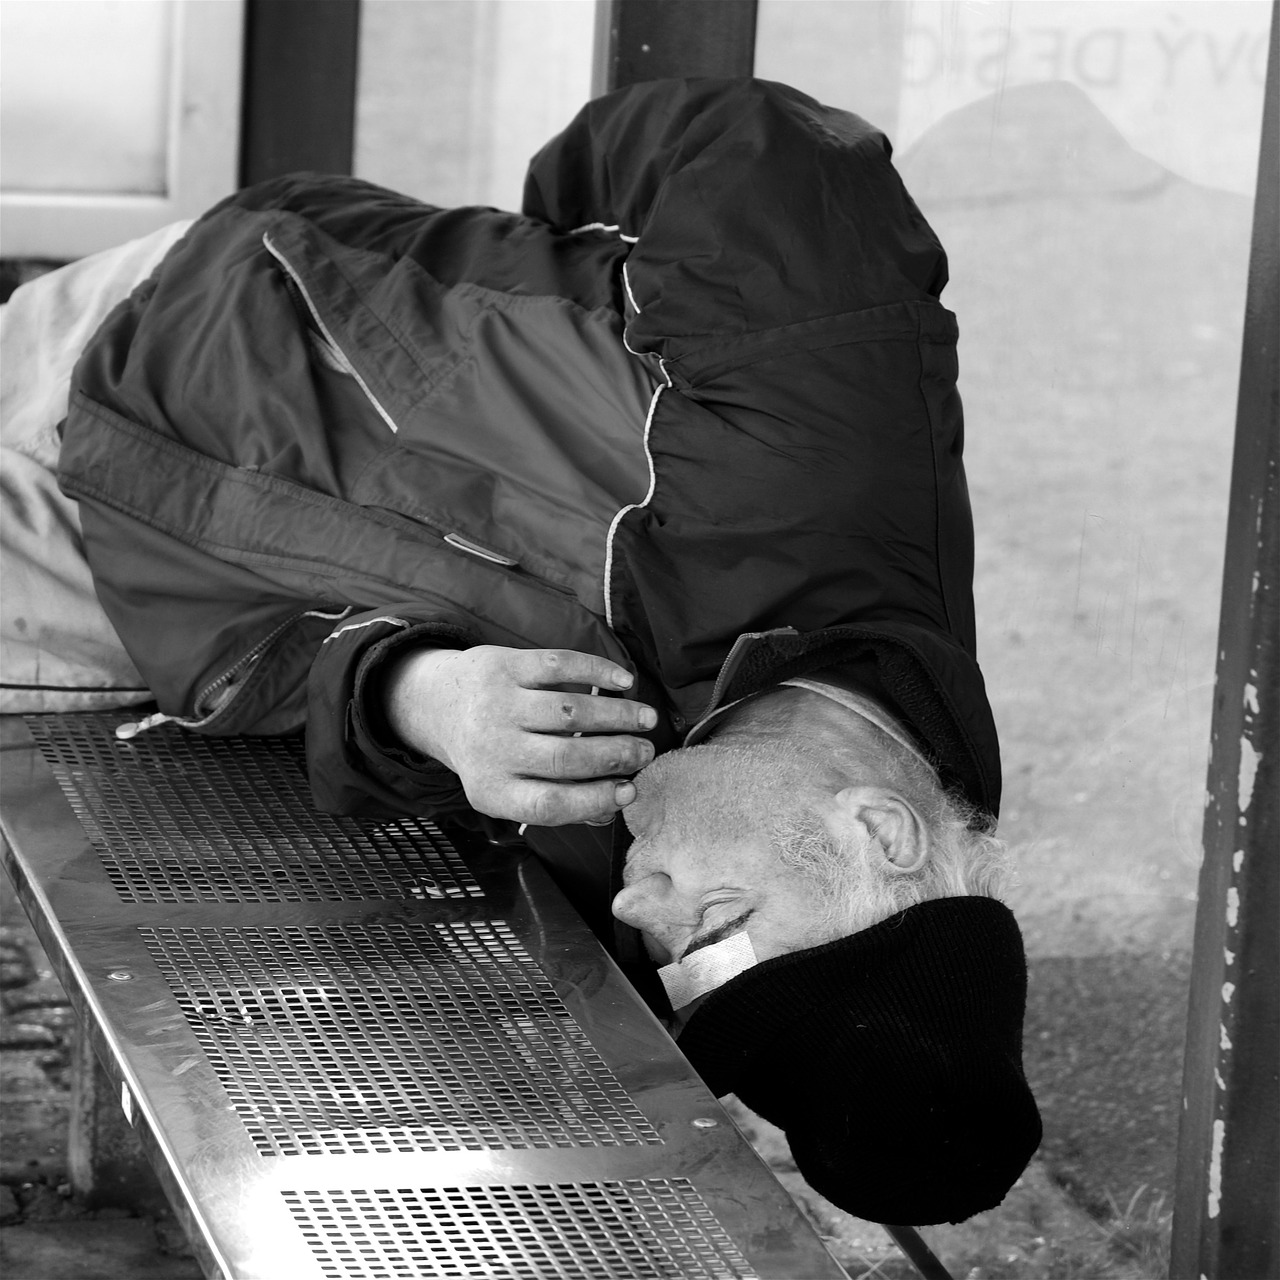 Homeless,man,sleeping,drunk,social - free image from needpix.com